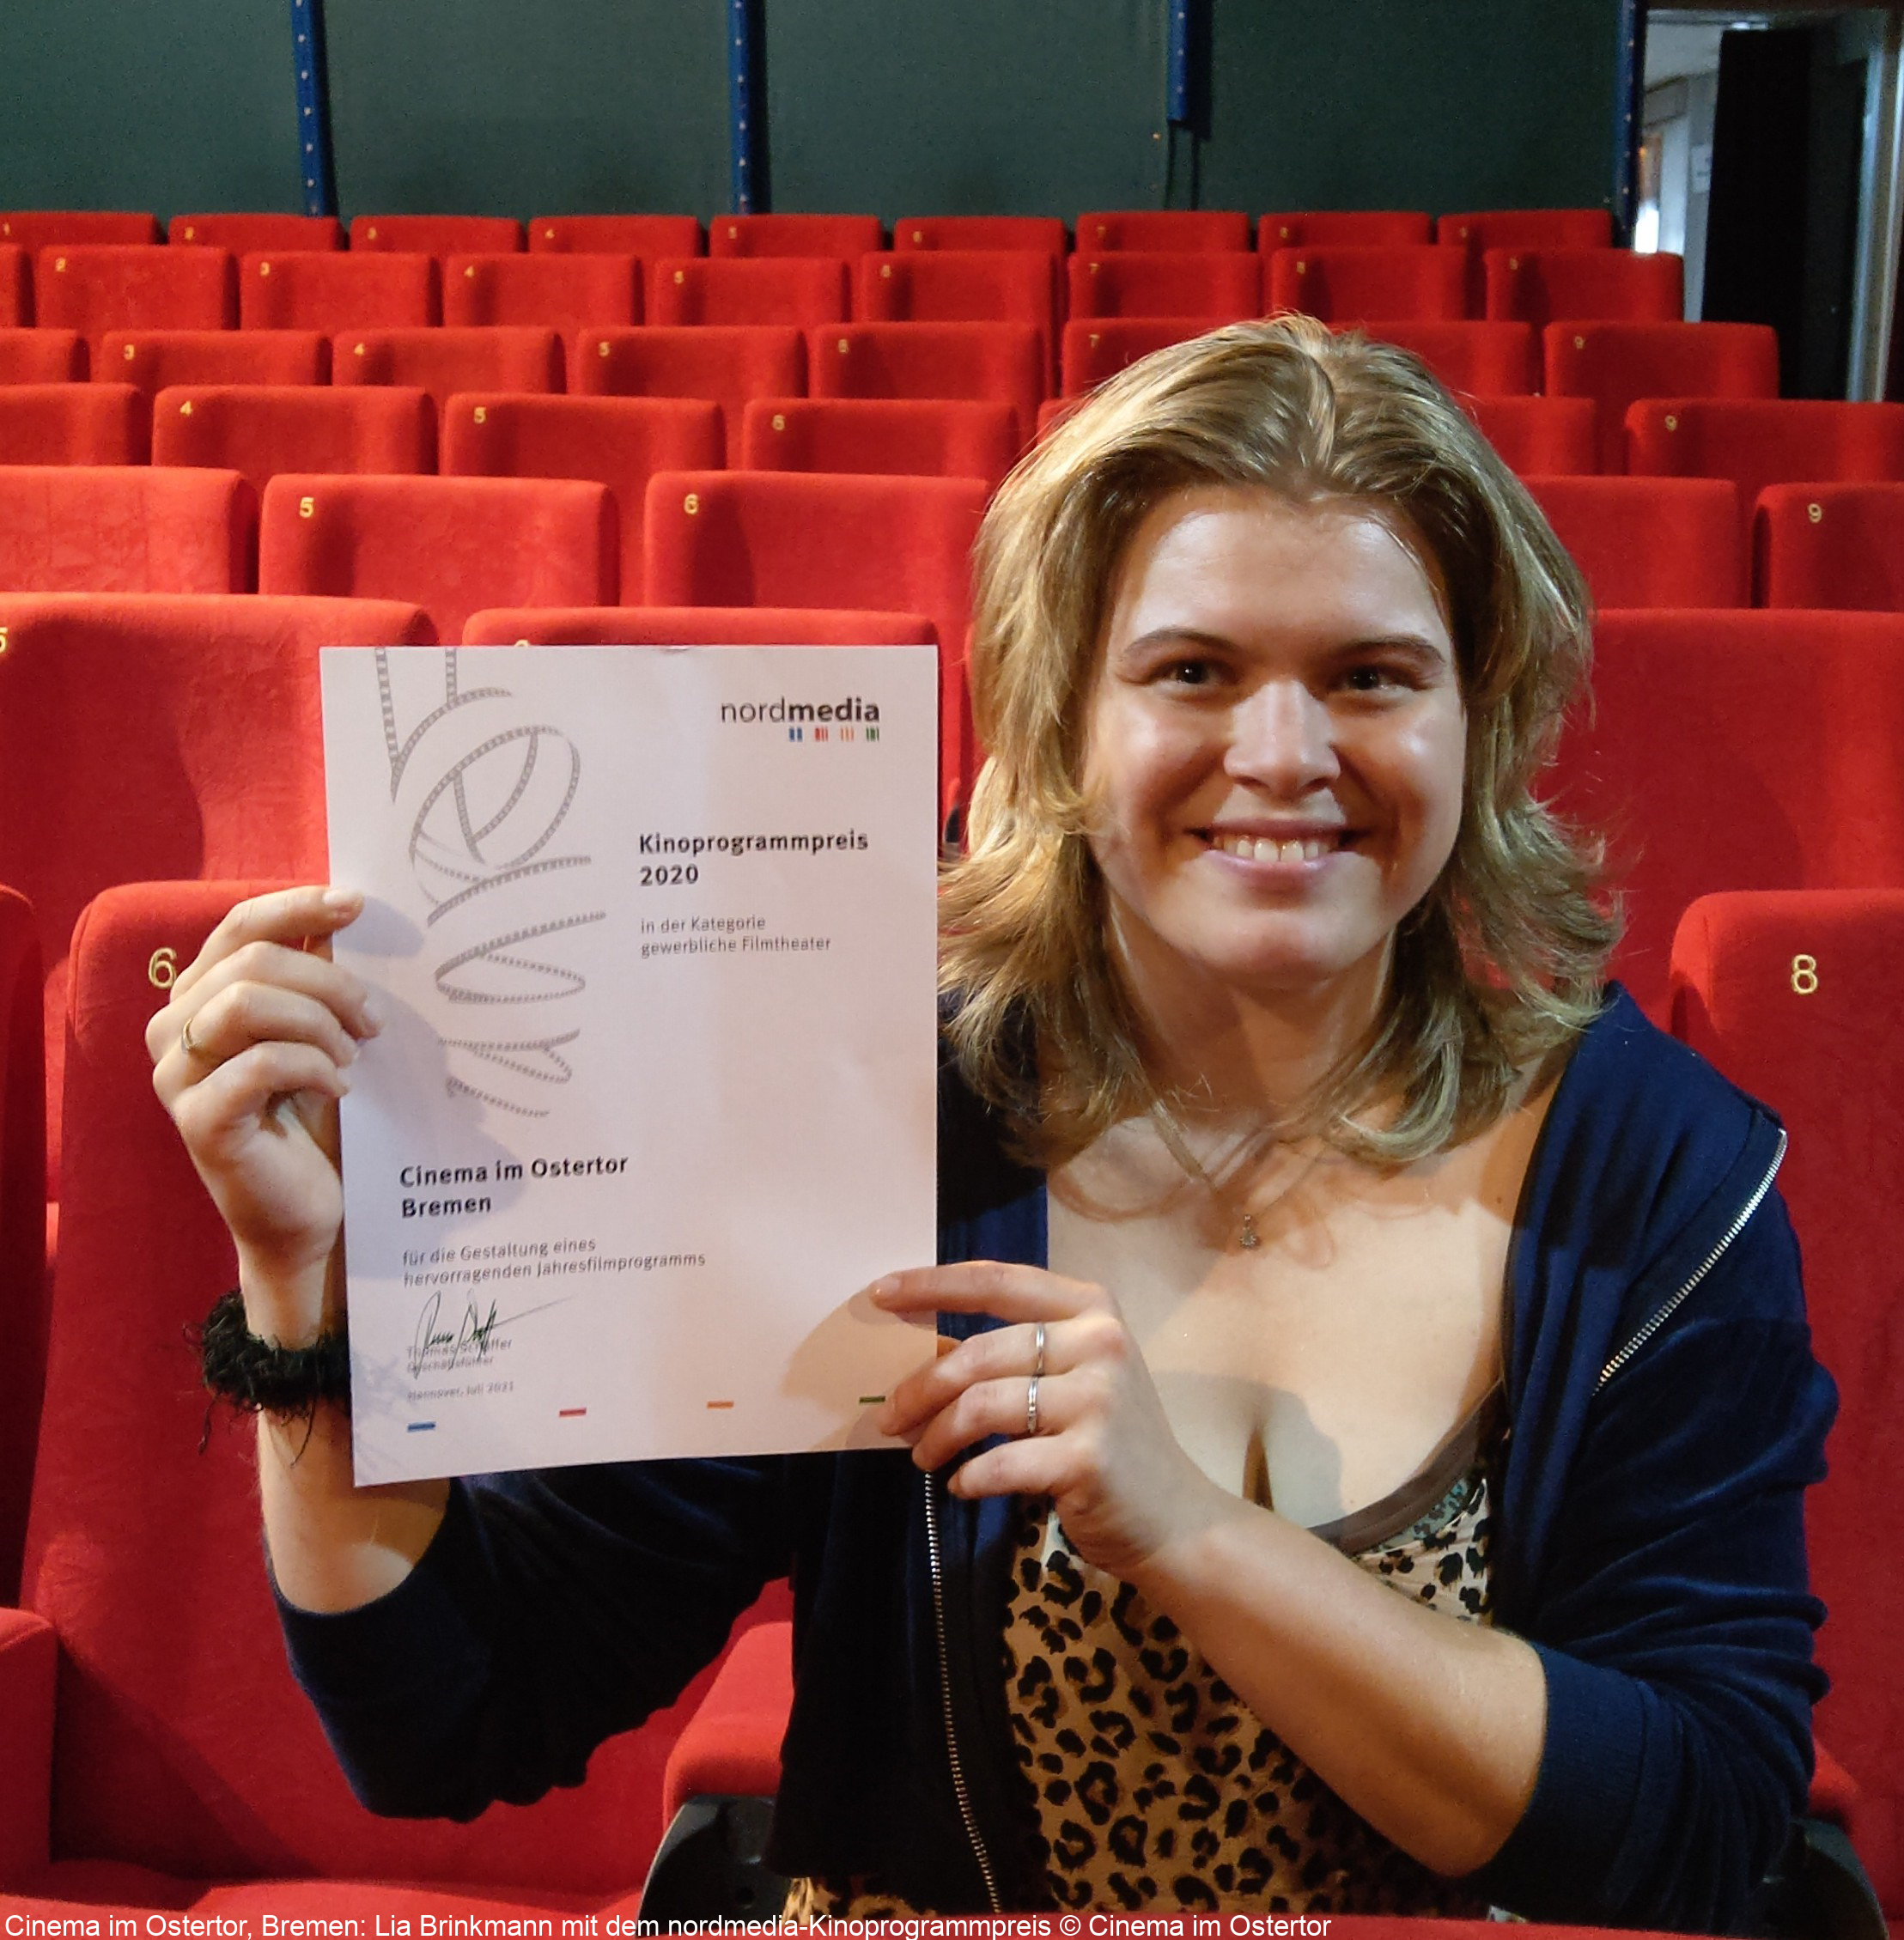 Cinema im Ostertor, Bremen: Lia Brinkmann mit dem nordmedia-Kinoprogrammpreis © Cinema im Ostertor